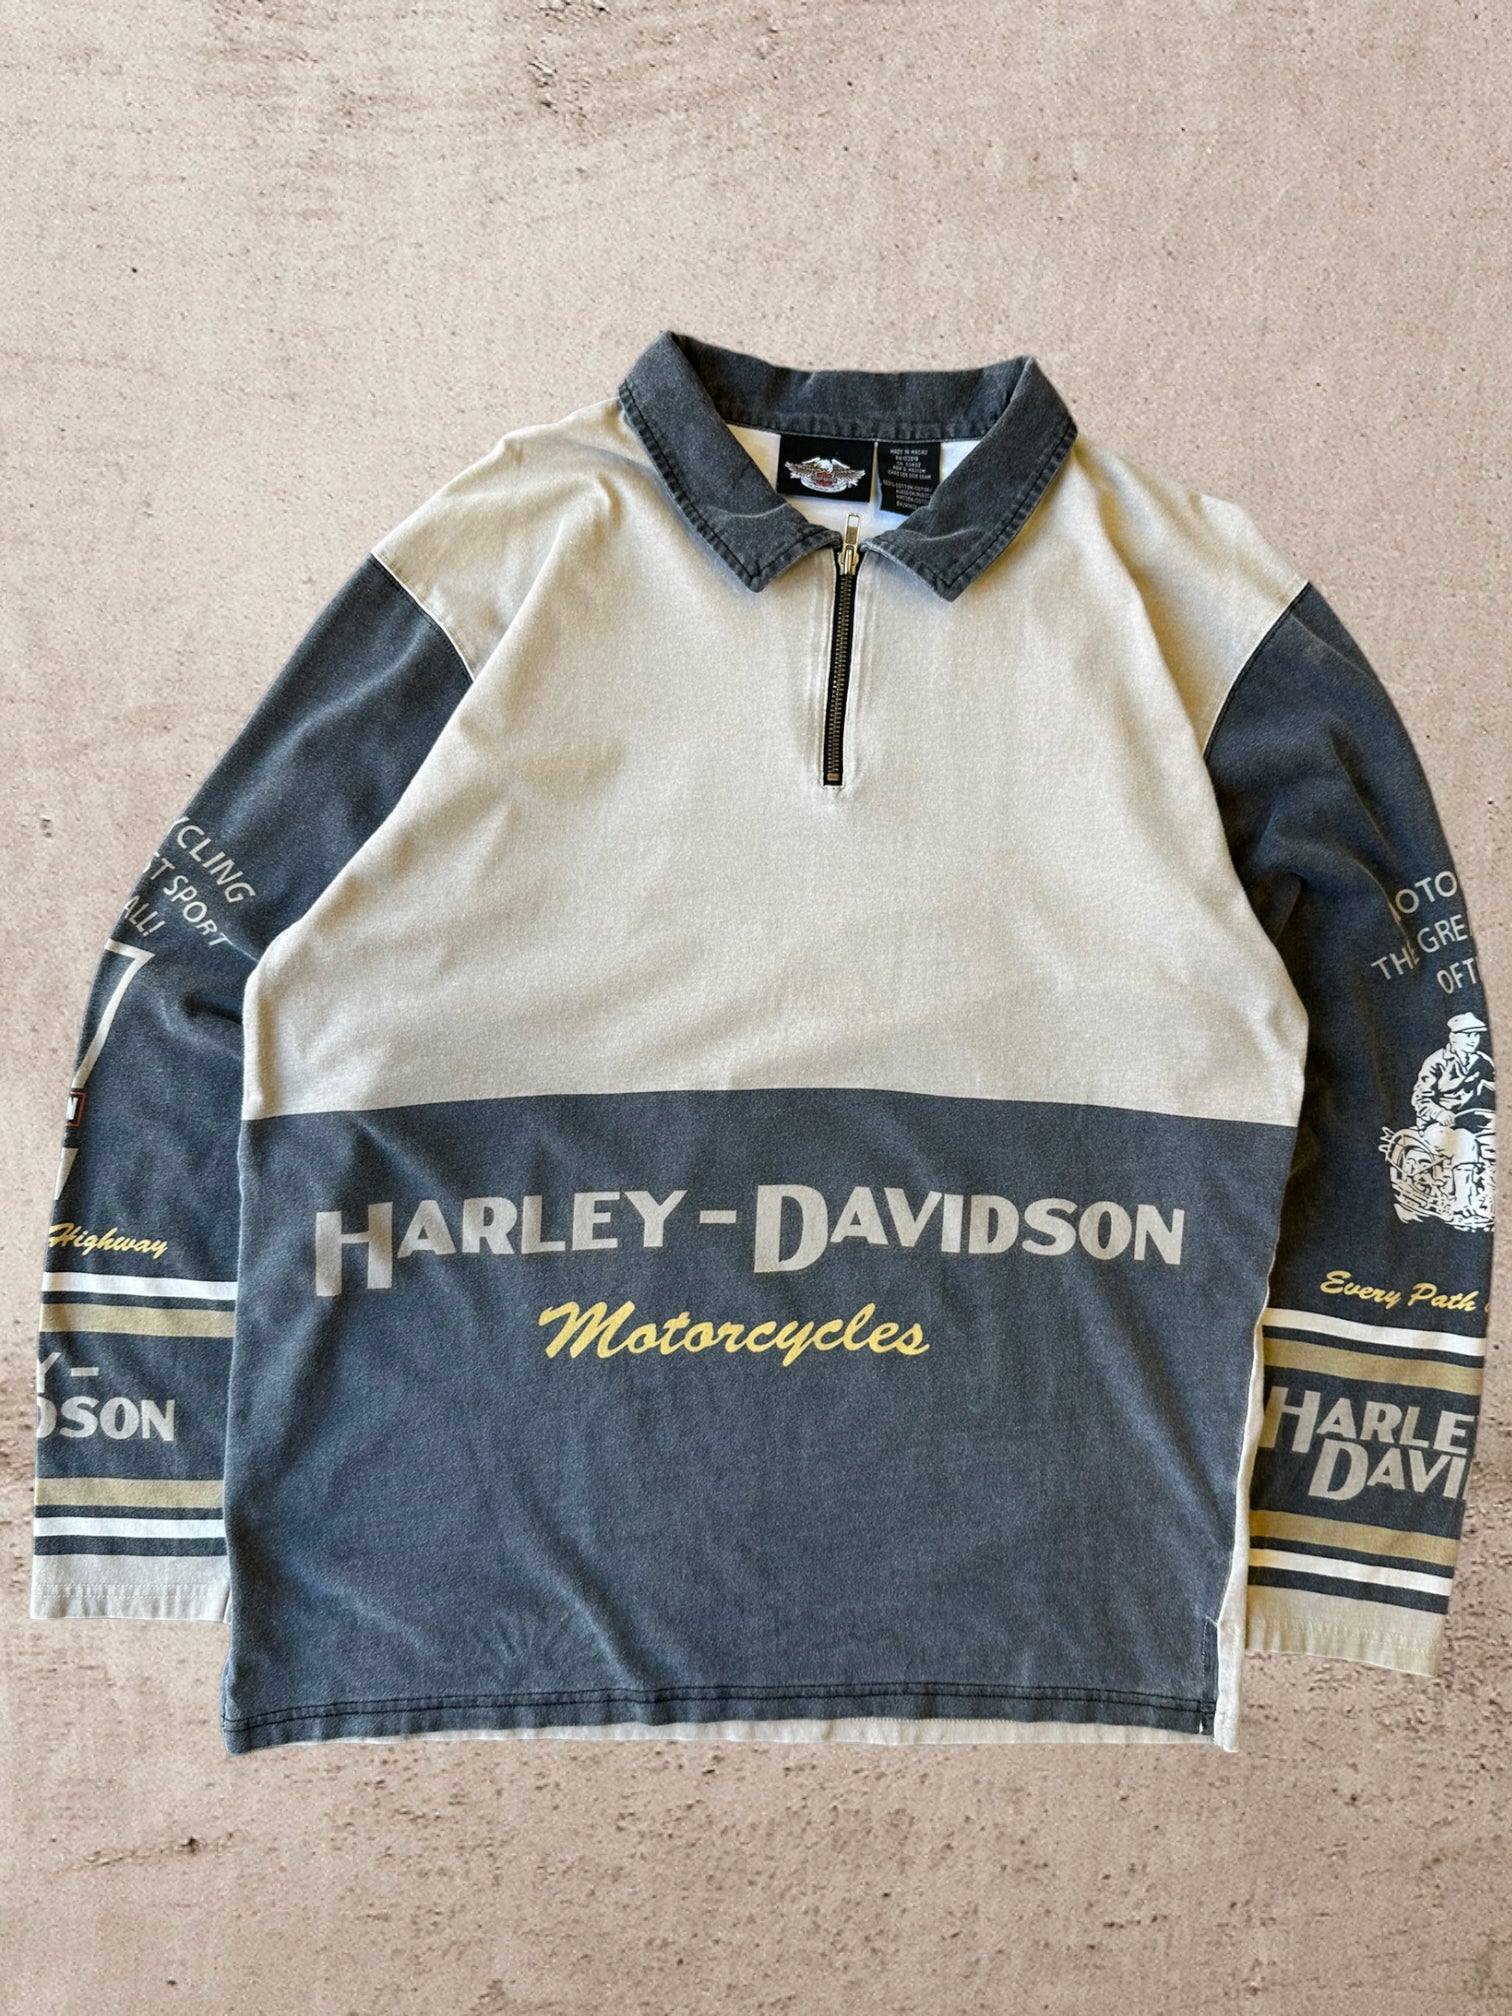 Vintage Harley Davidson Long Sleeve Shirt - Large